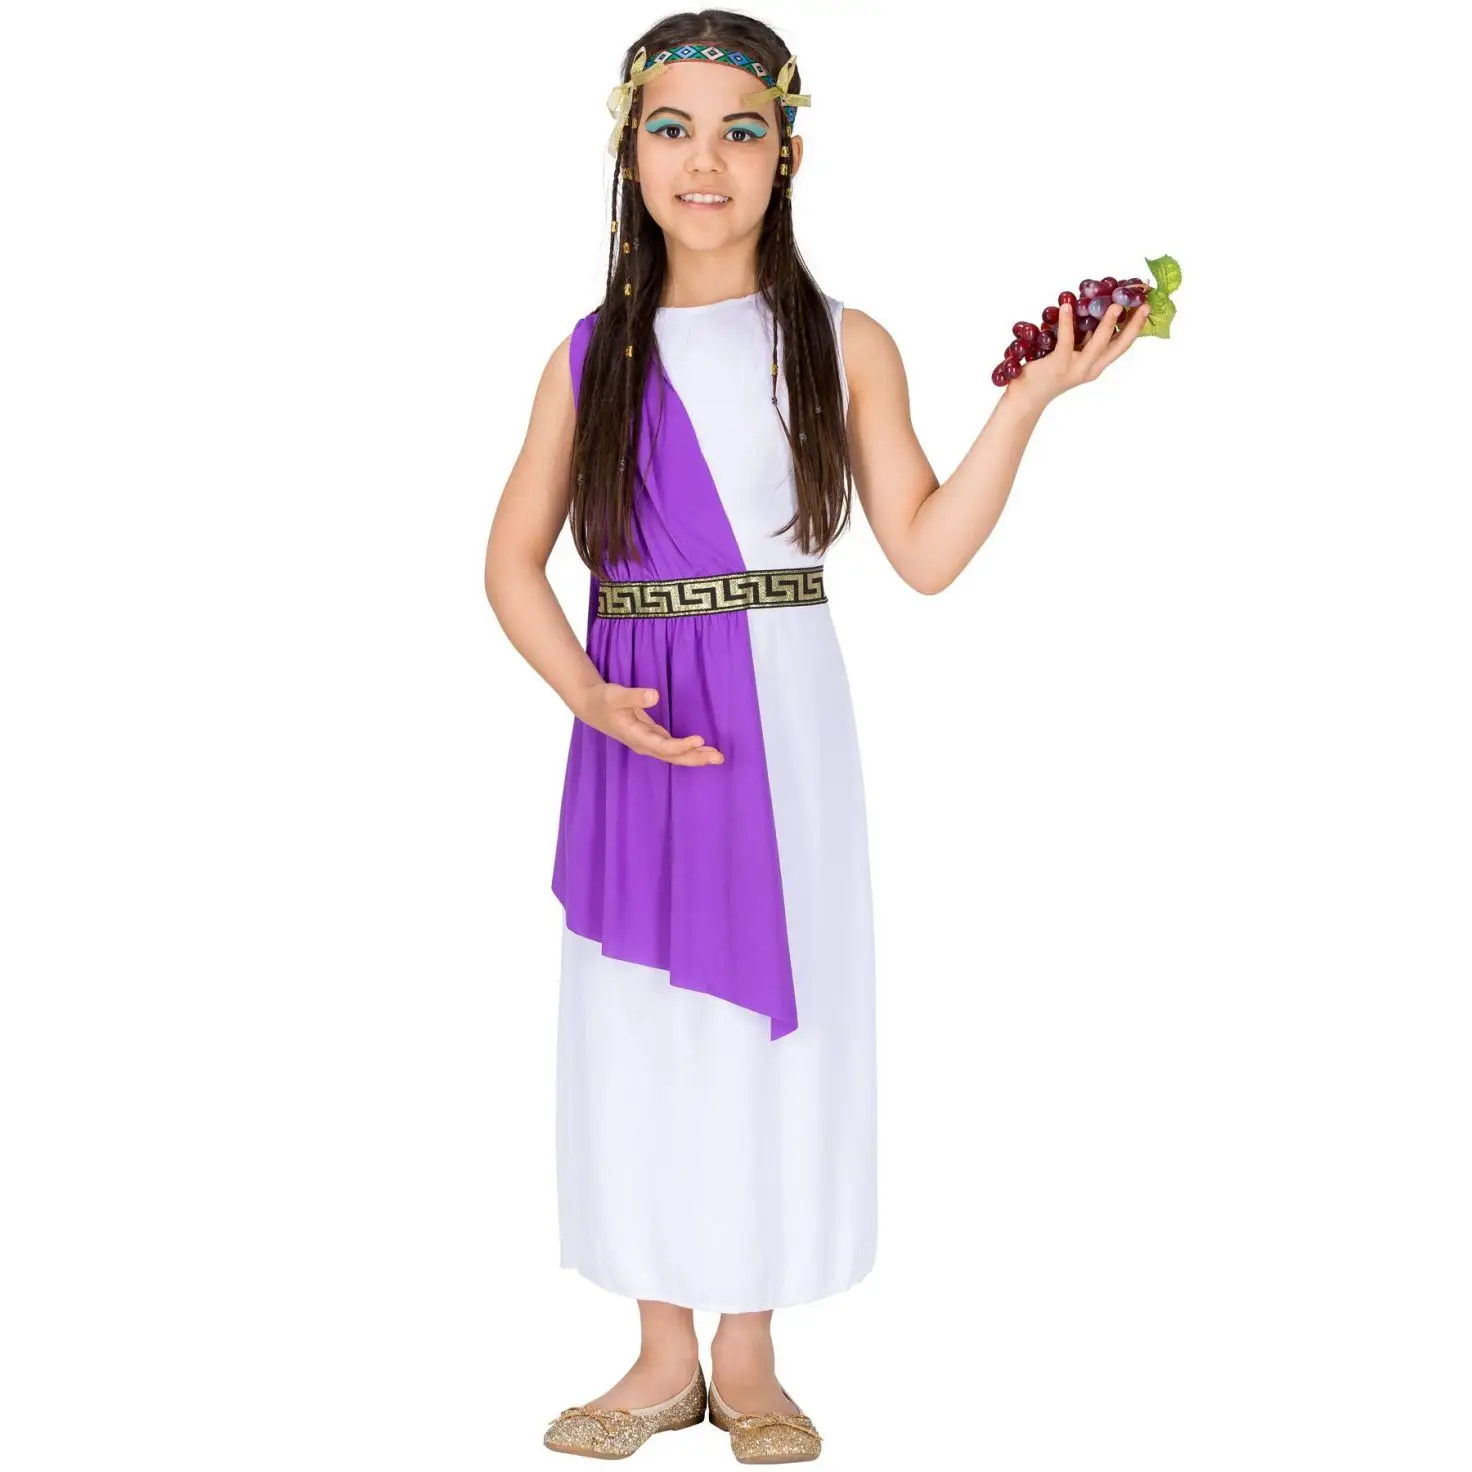 Traje de Halloween para niños, traje de diosa griega, púrpura, proveedor profesional